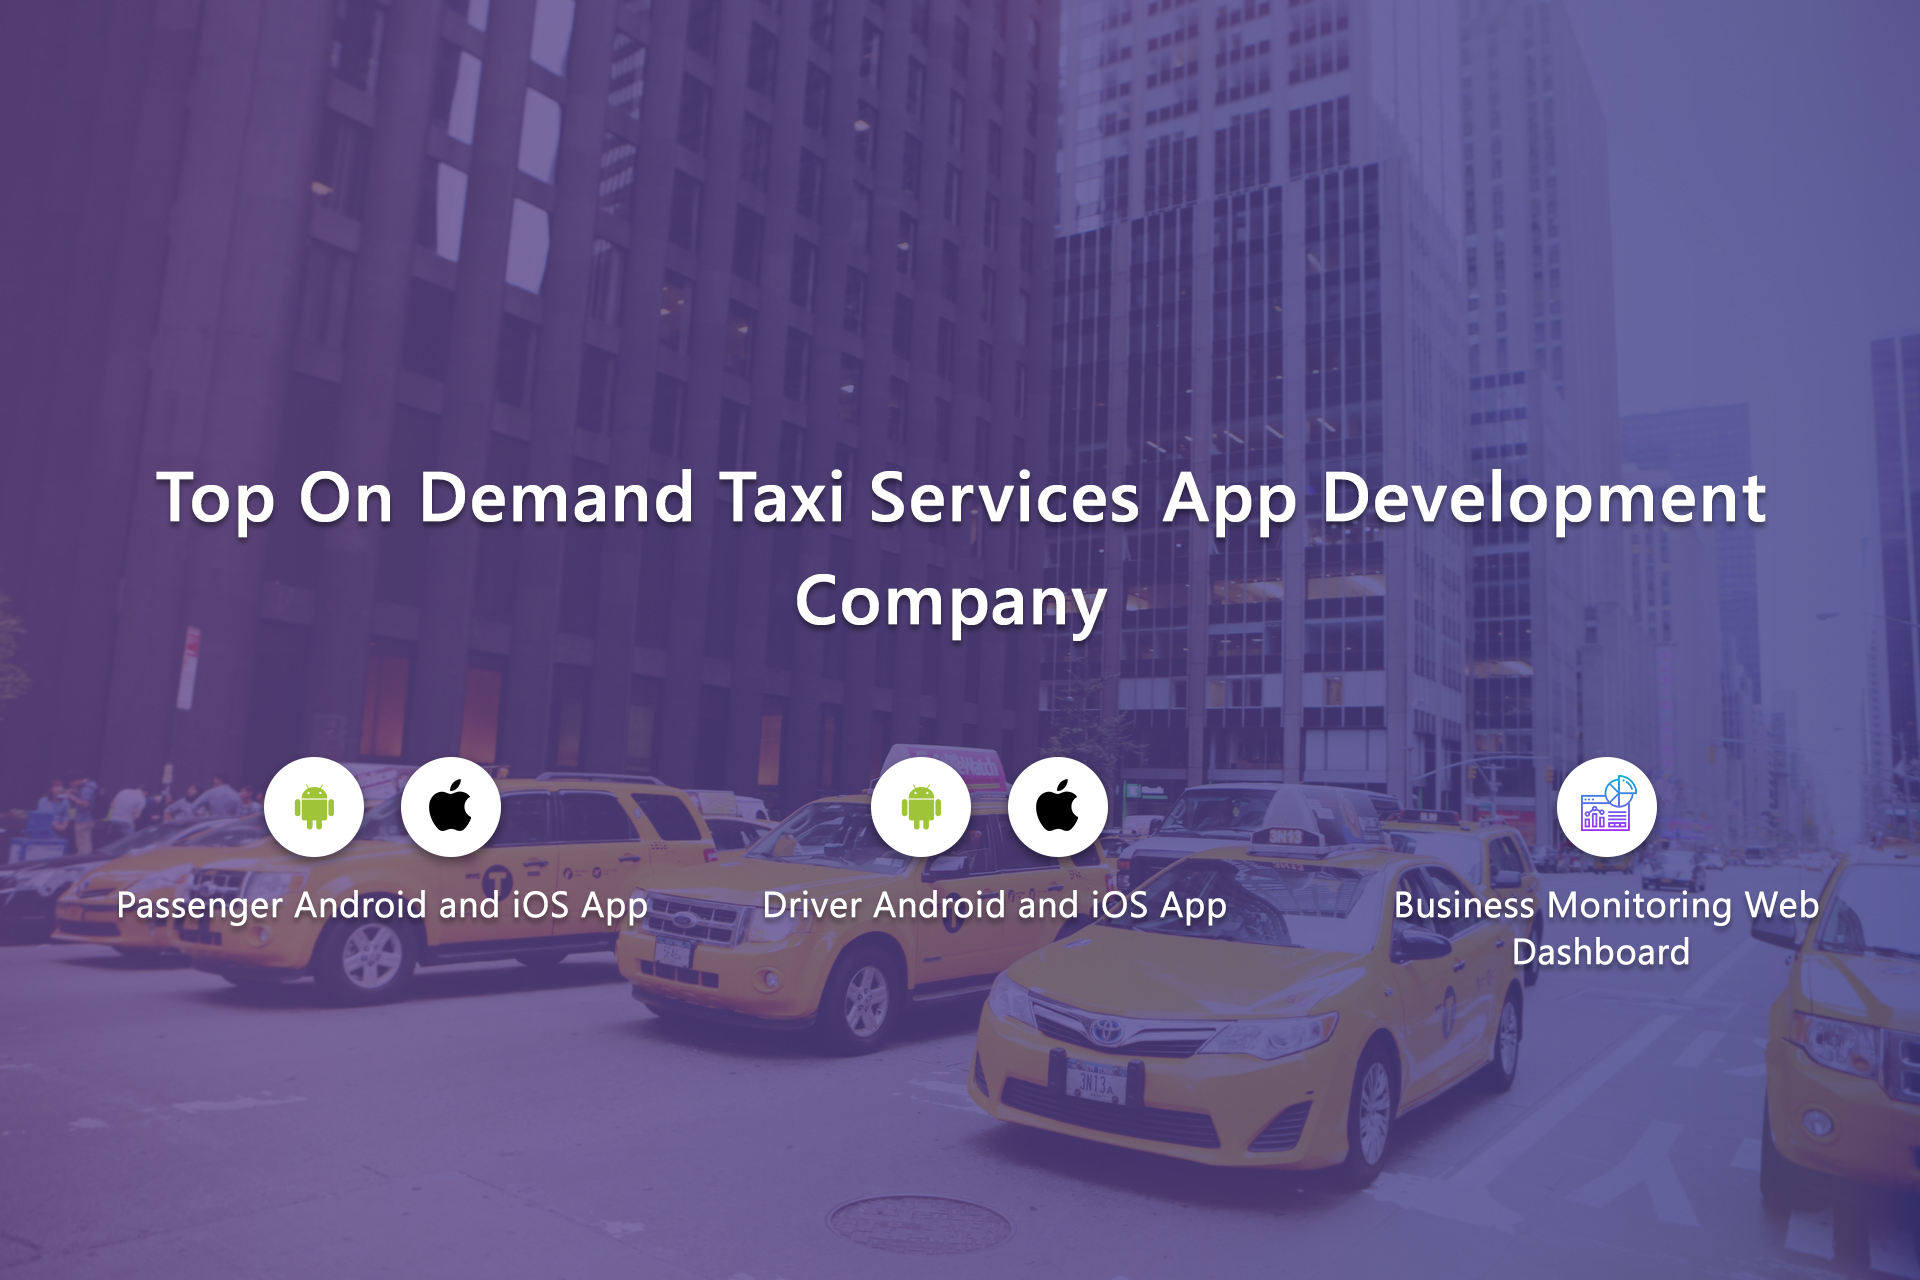 Top on Demand Services App Development Company